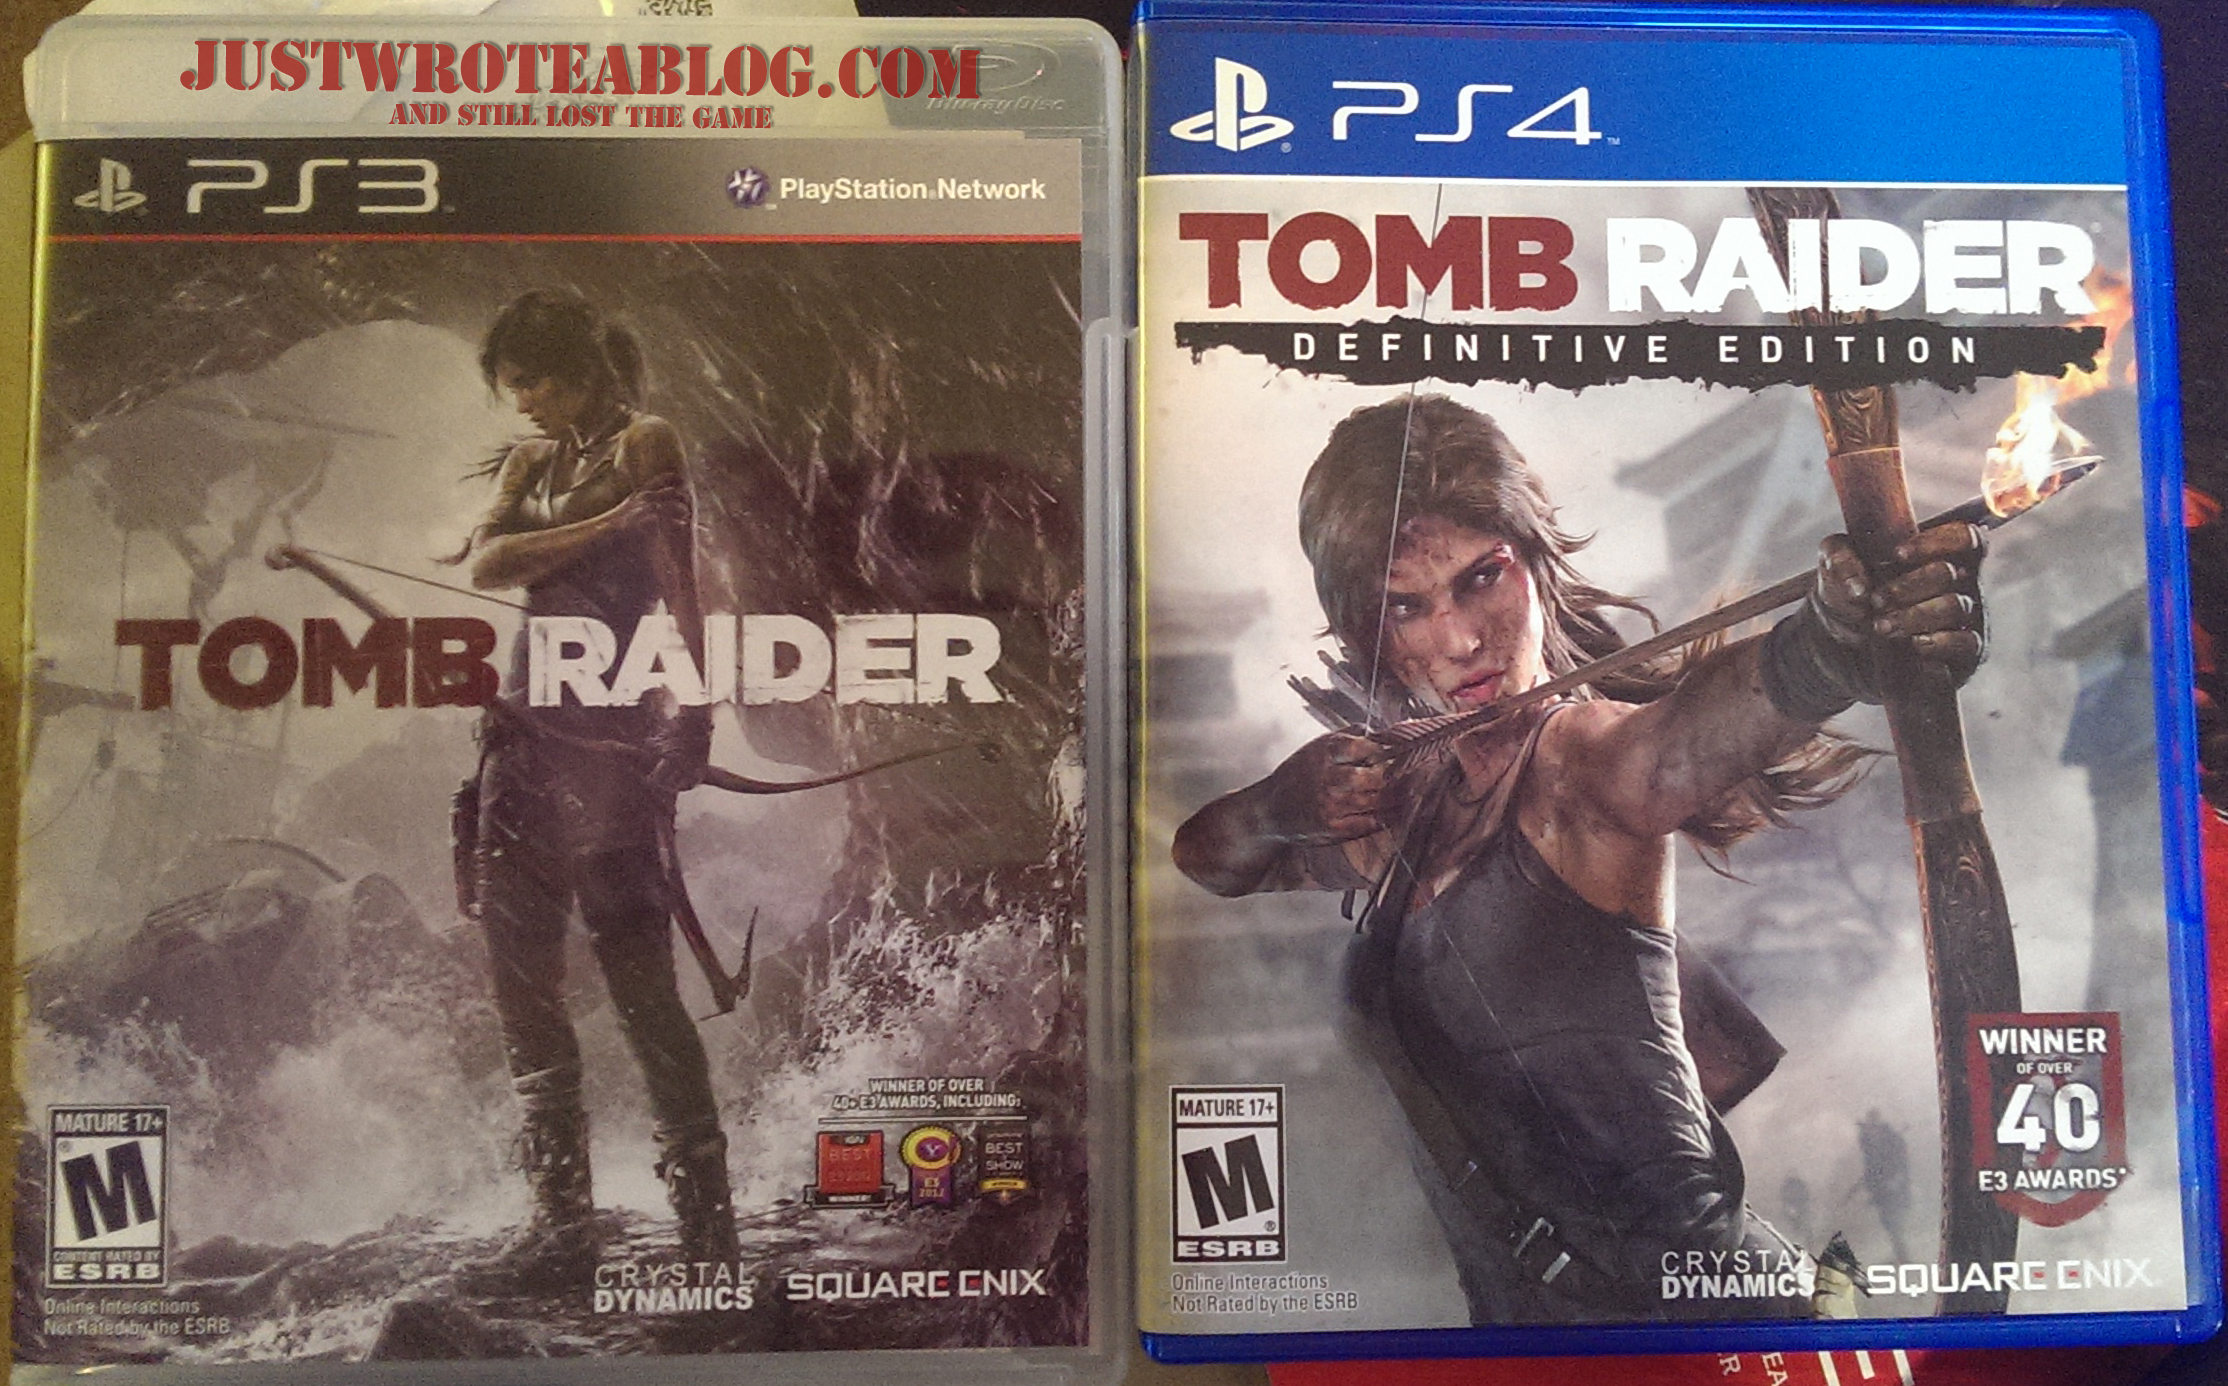 Tomb raider ps4 купить. Томб Райдер ps3. Tomb Raider Definitive Edition ps4. Томб Райдер 1 часть ПС 4. Tomb Raider Definitive Edition ps4 обложка.